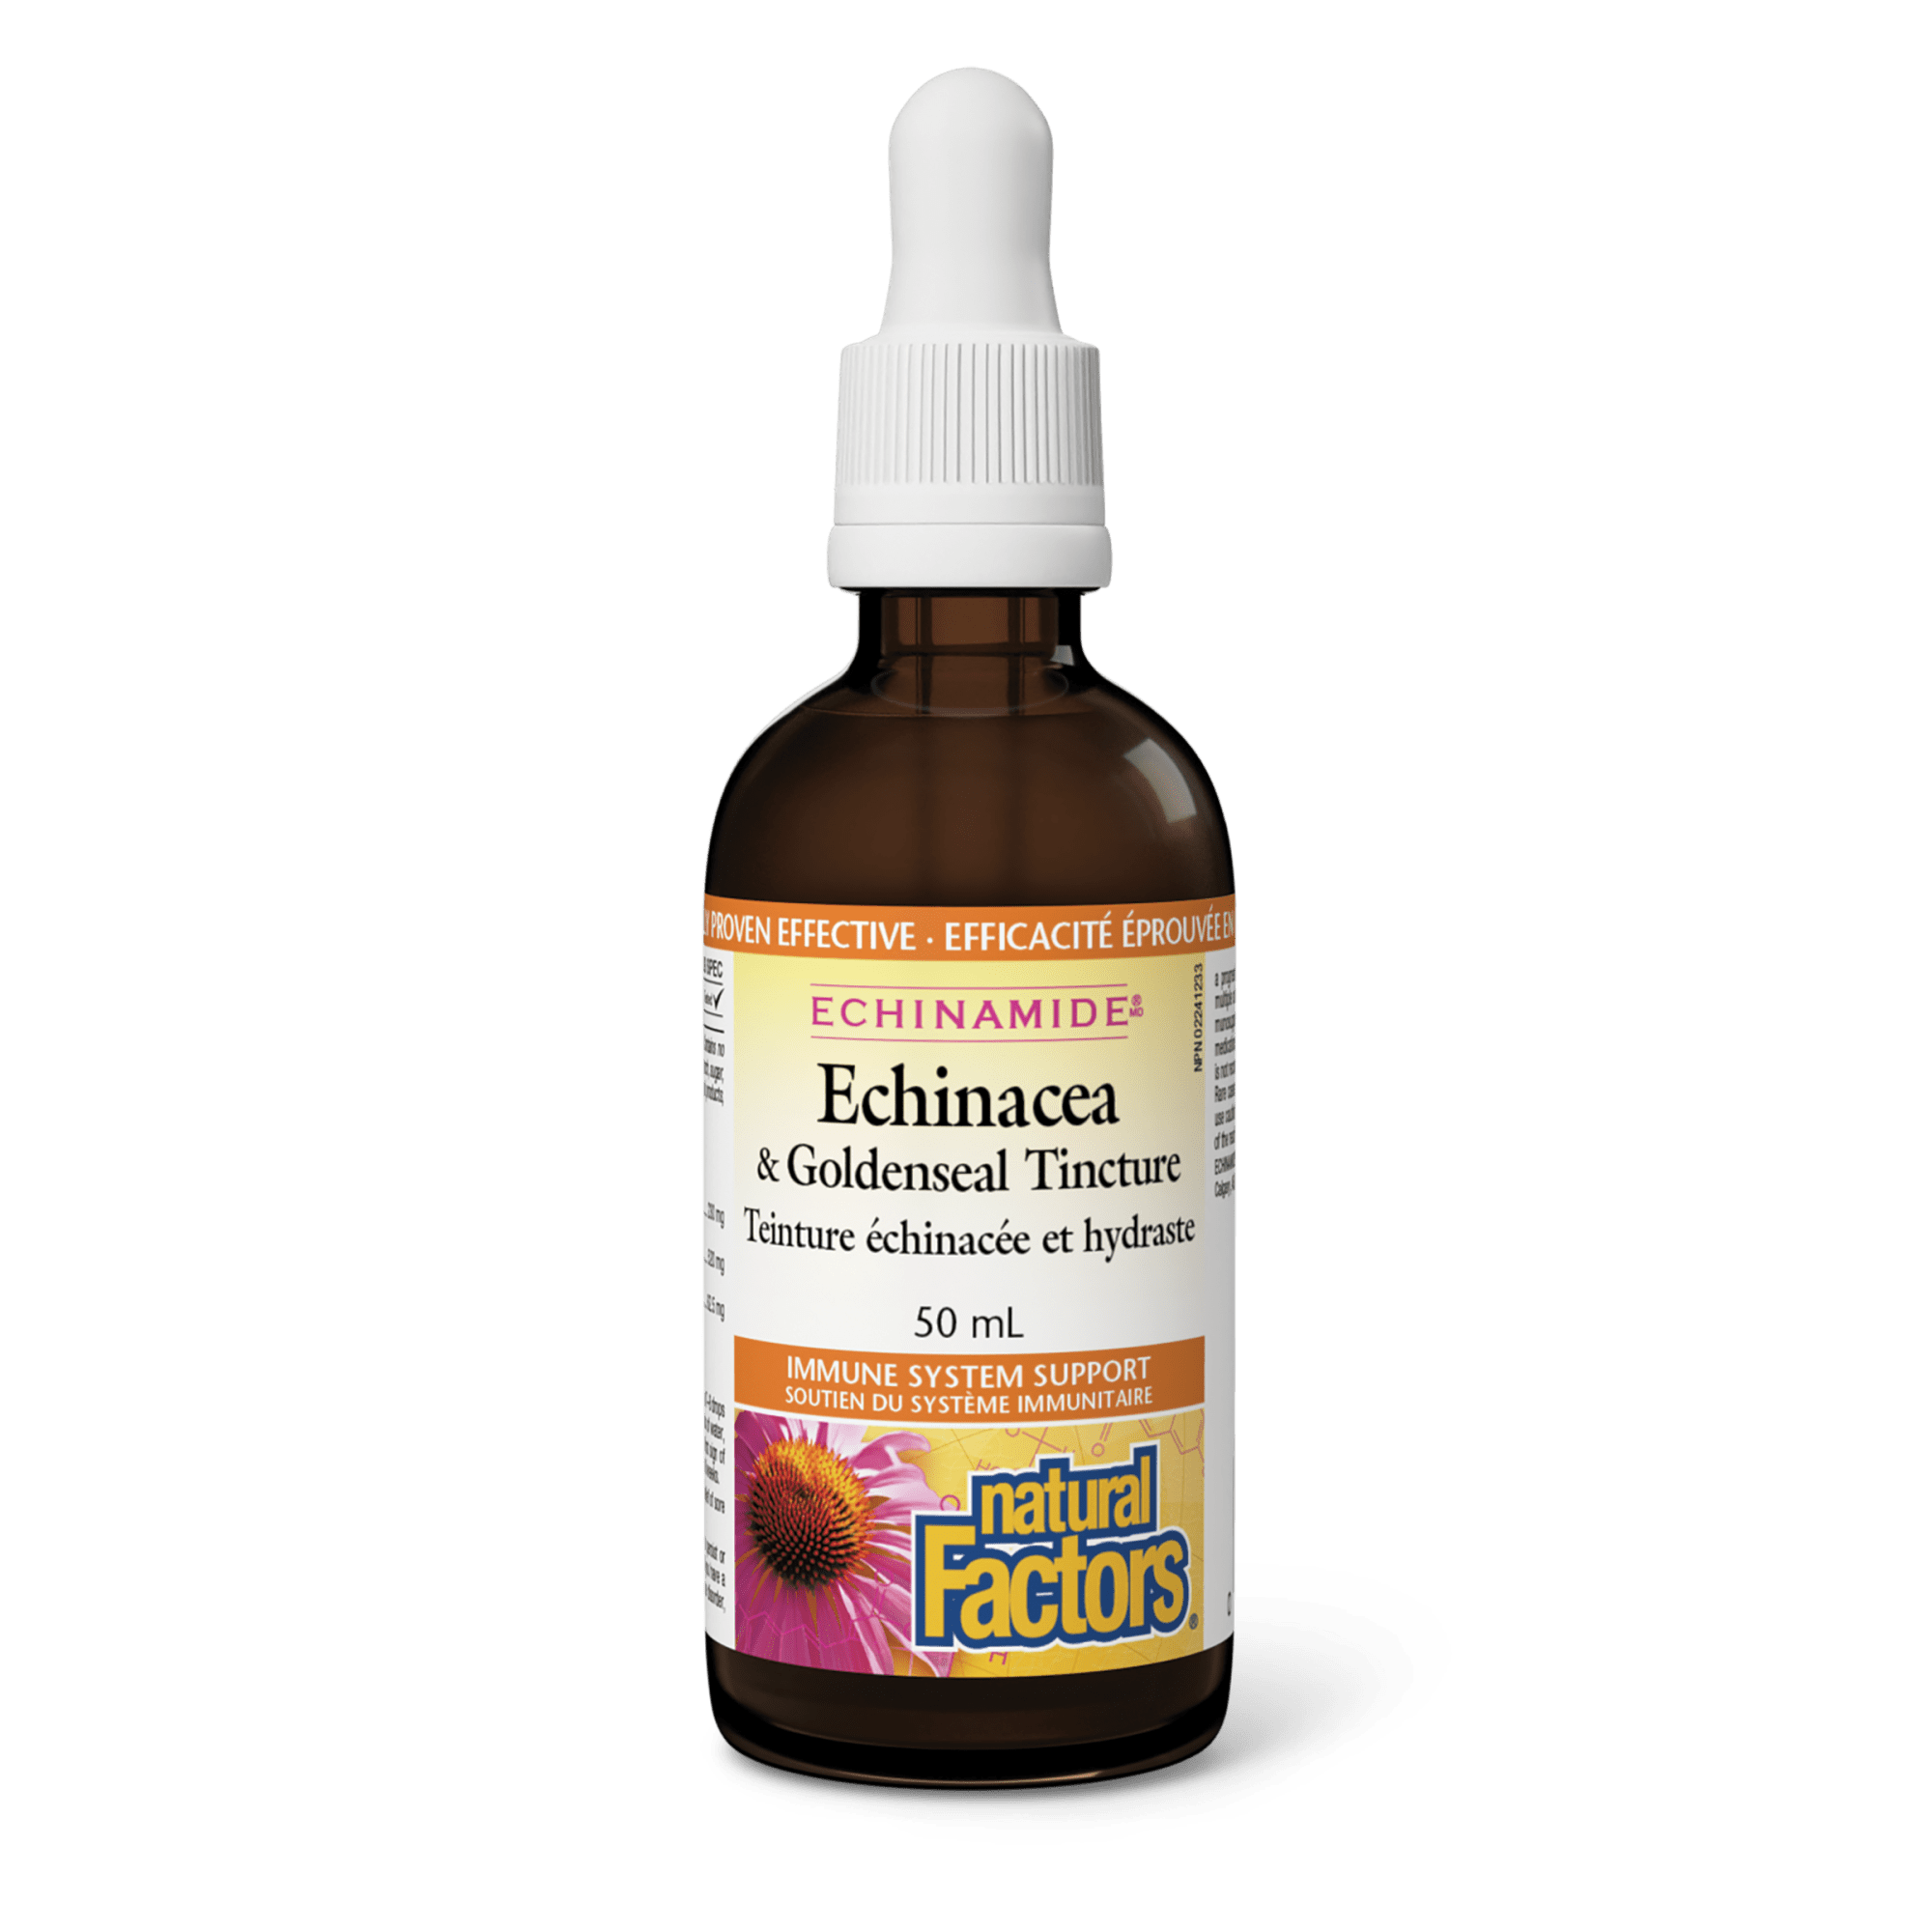 Natural Factors ECHINAMIDE Echinacea & Goldenseal Tincture 50ml